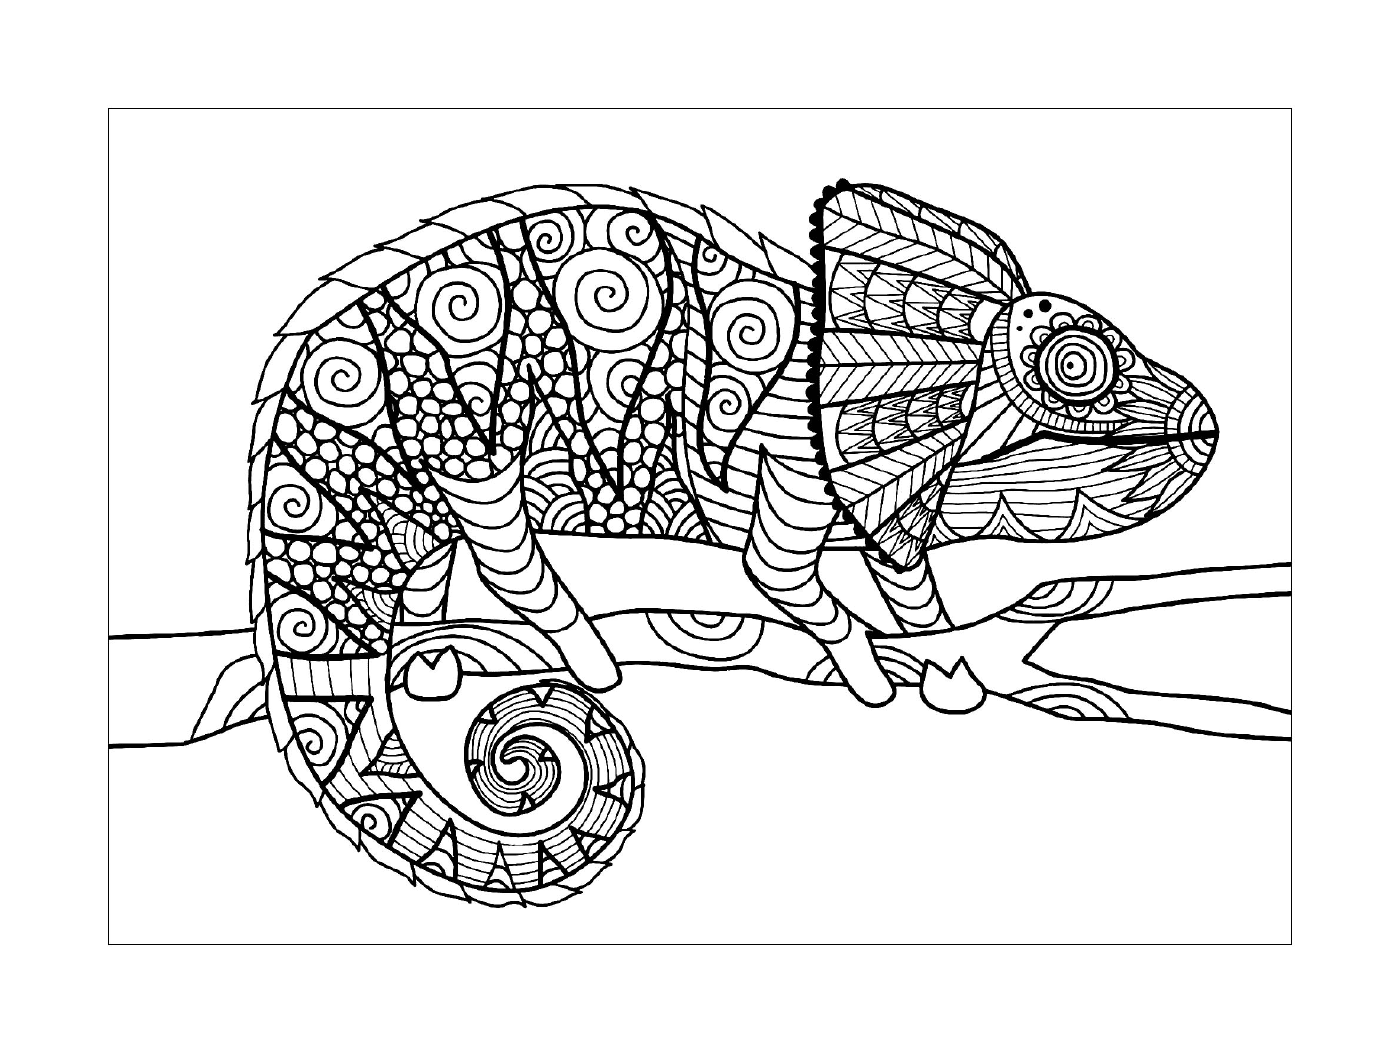  a chameleon on a jungle branch 